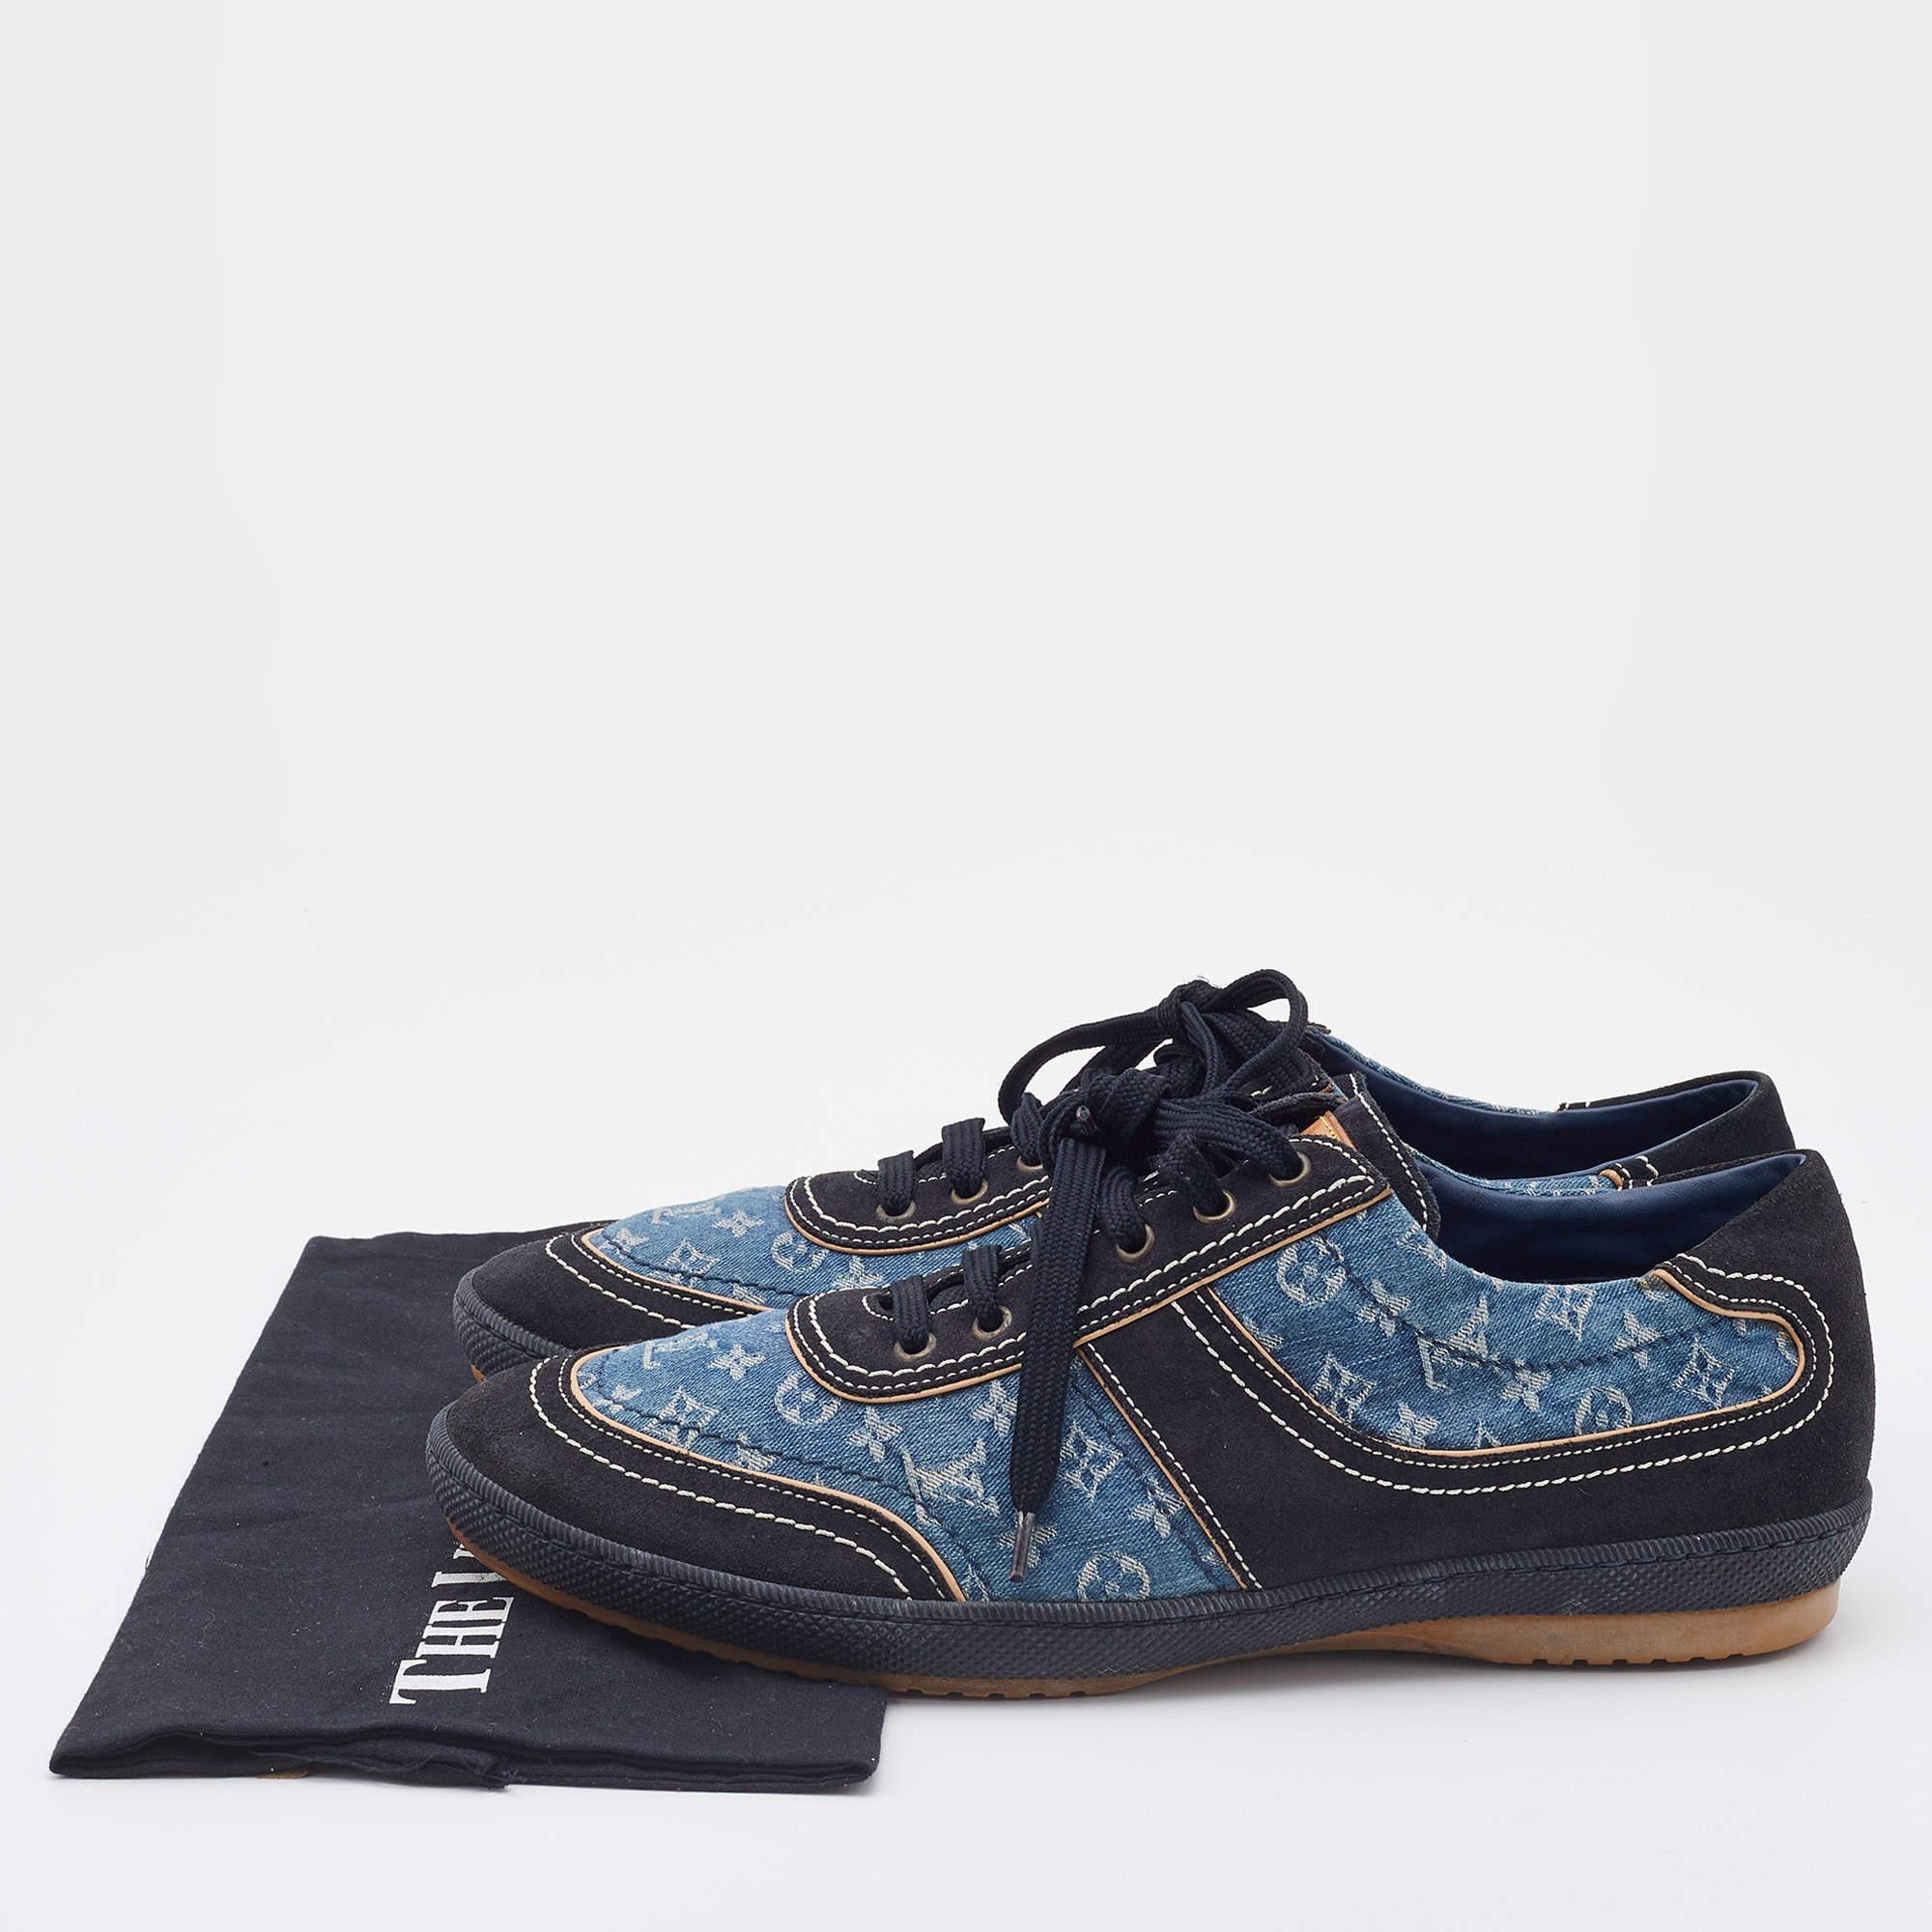 Louis Vuitton Blue/Black Monogram Denim and Suede Low Top Sneakers Size 42 5